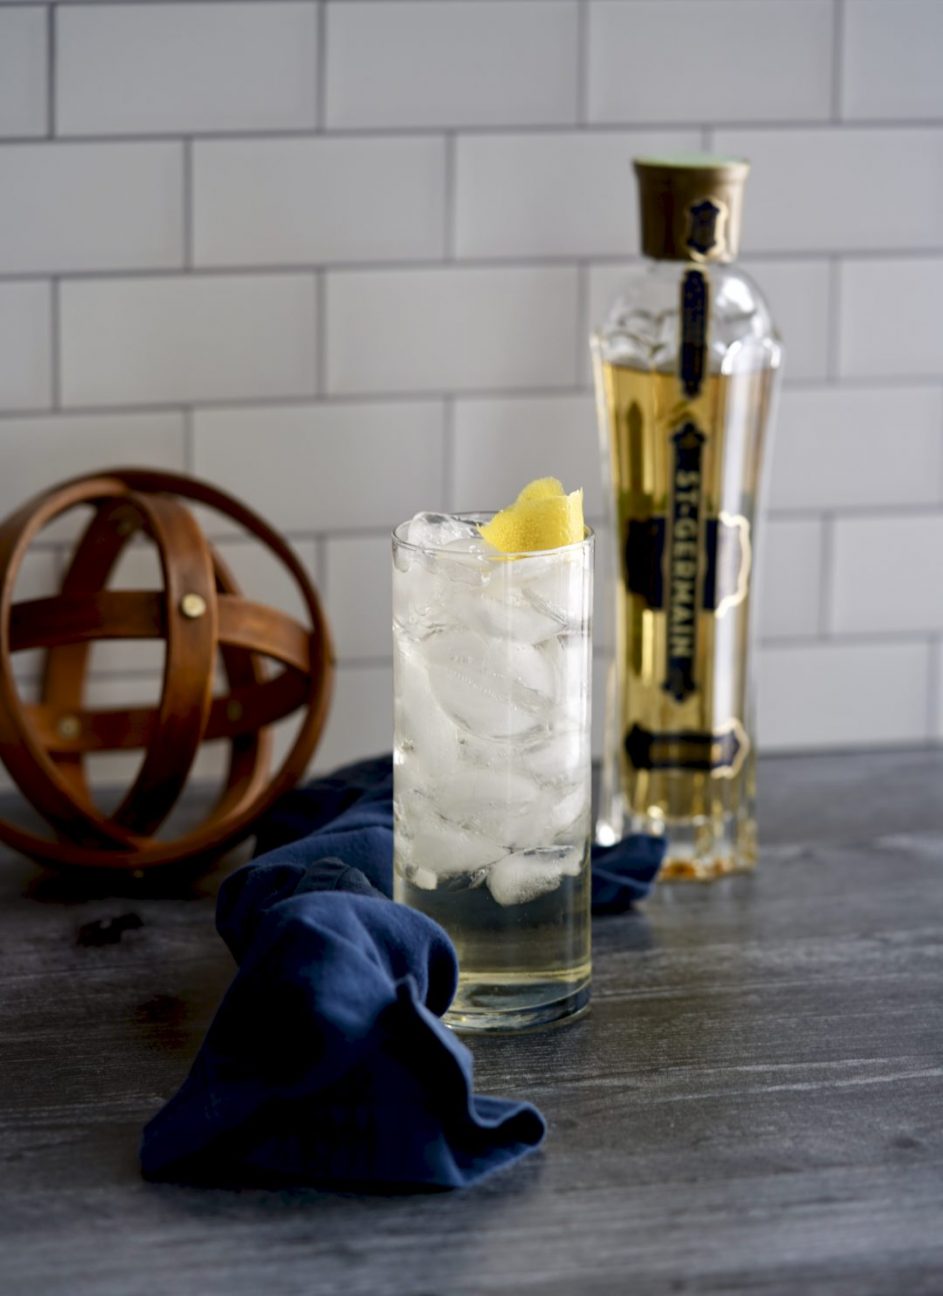 Saint Germain cocktail